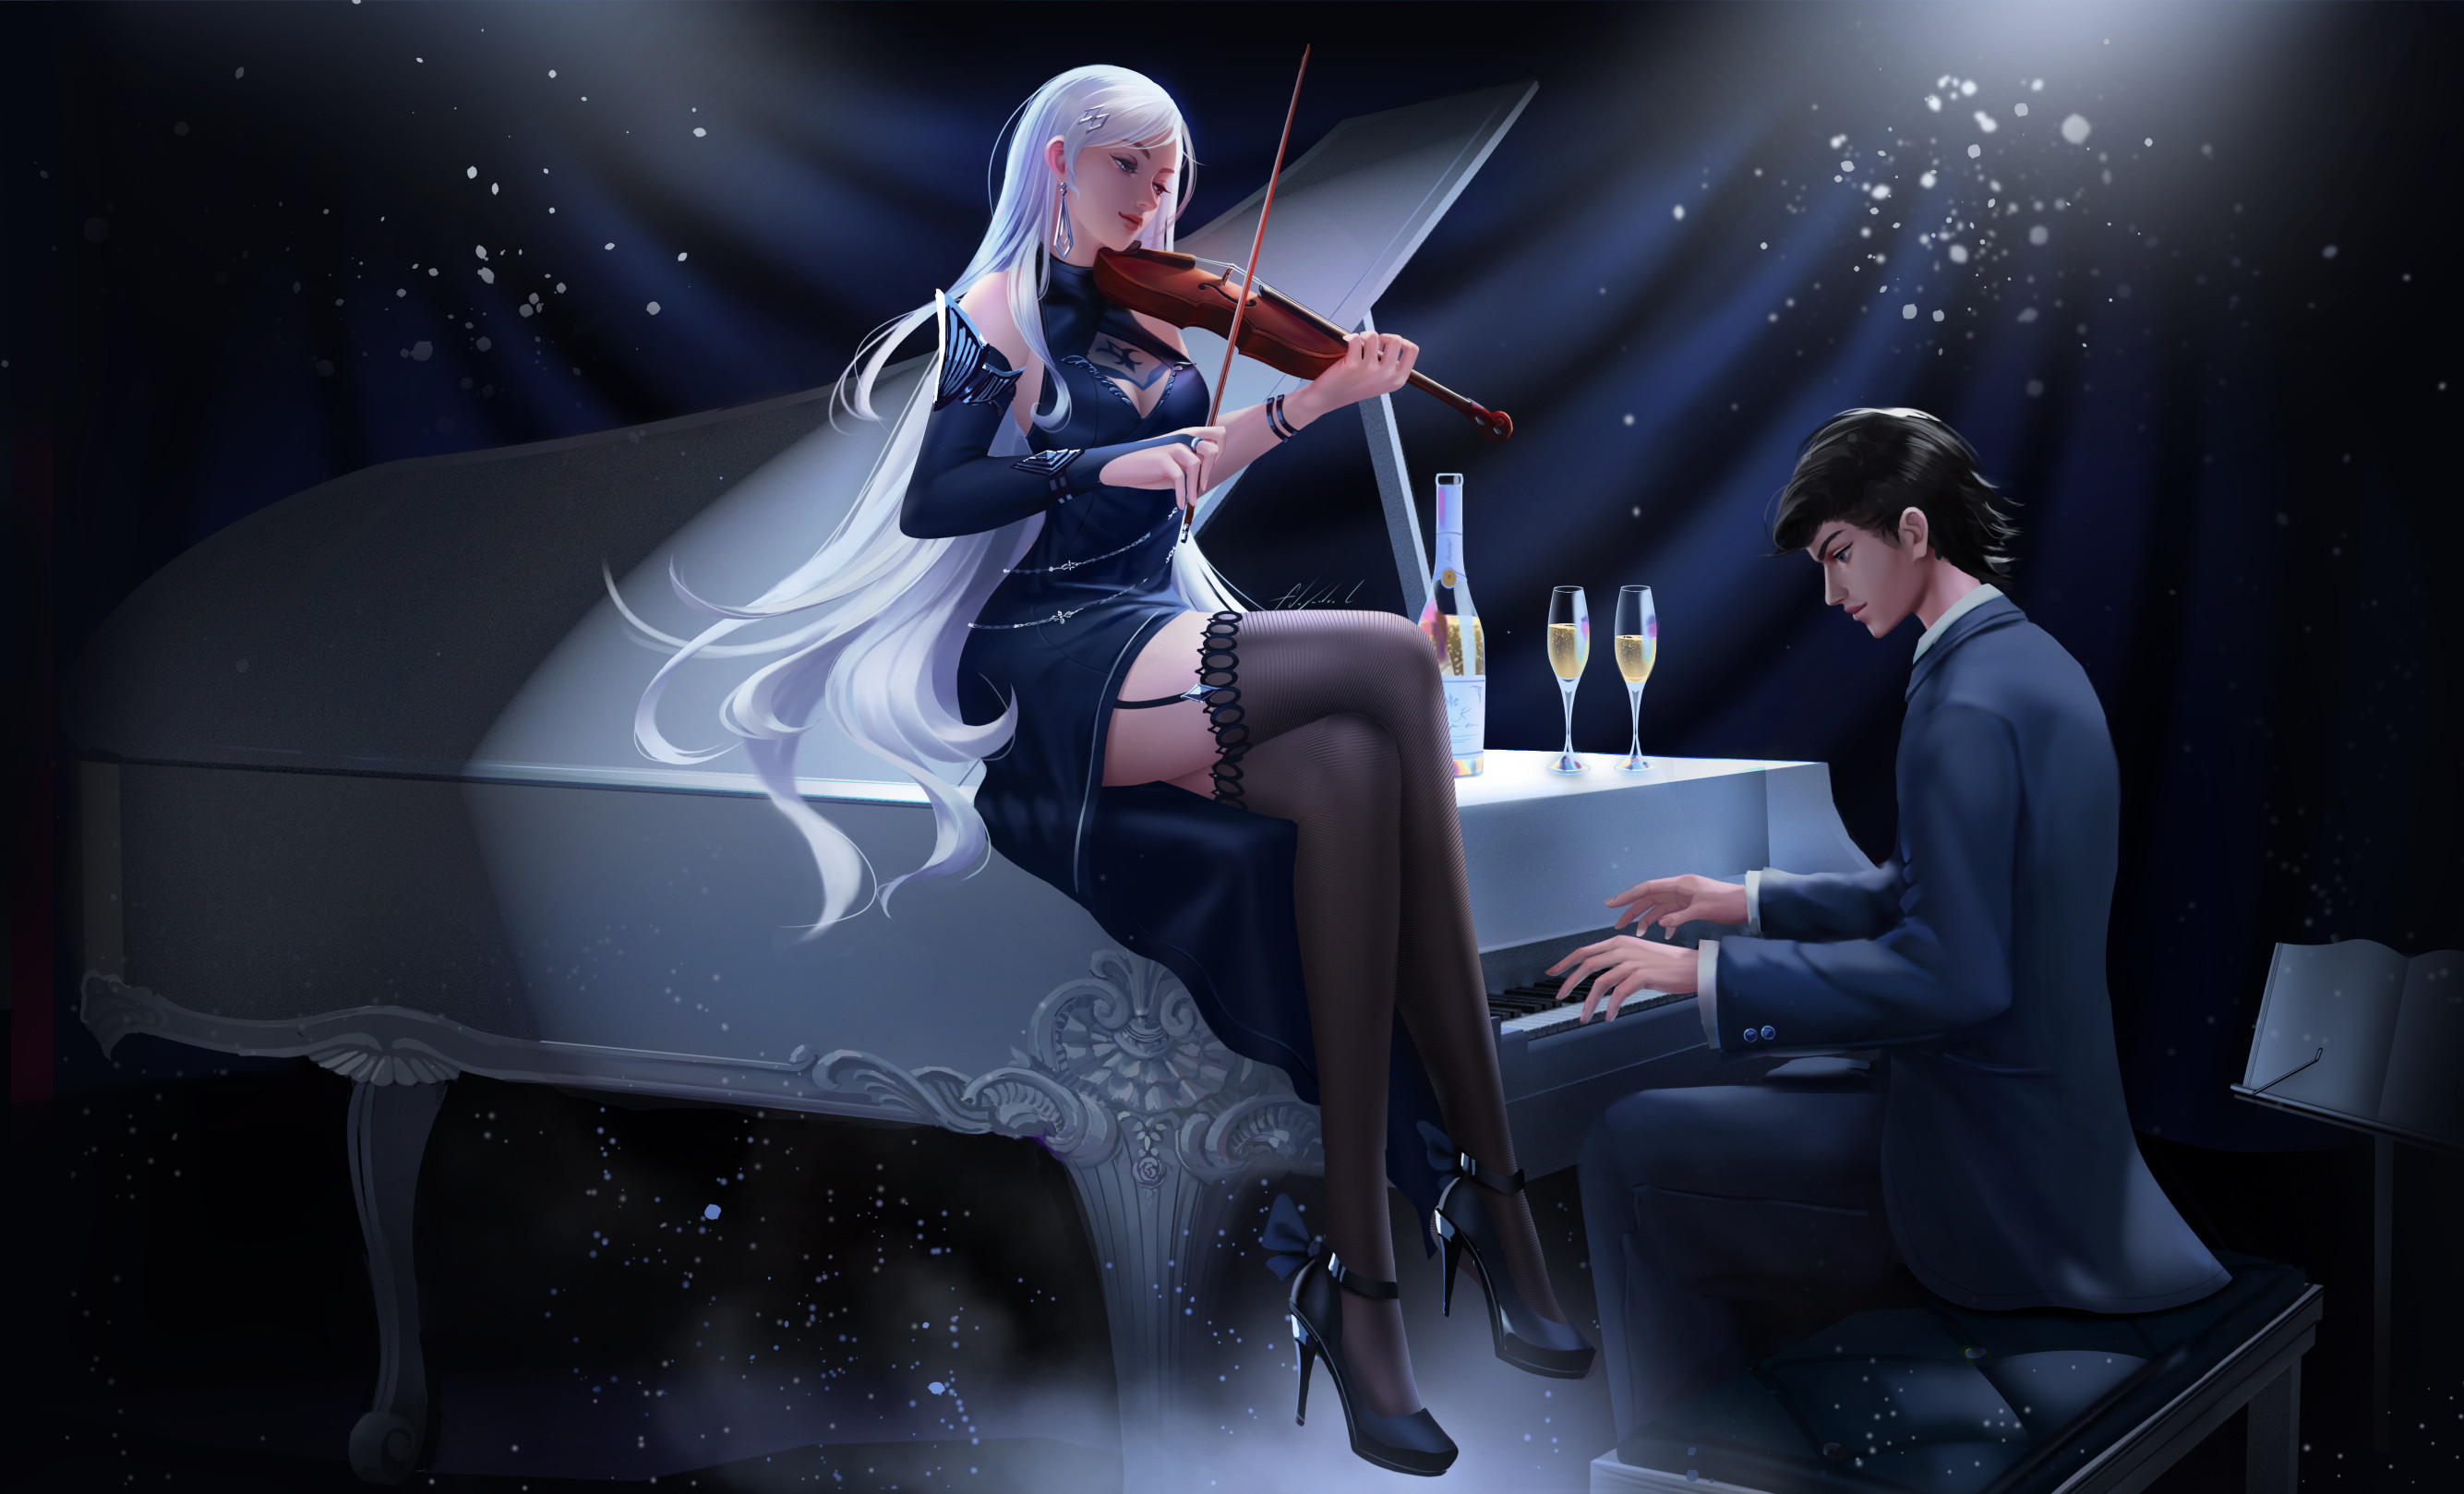 Alejandro Lara Drawing Women Men Piano Playing Violin Champagne Silver Hair Legs Crossed Dress Suits 2669x1618